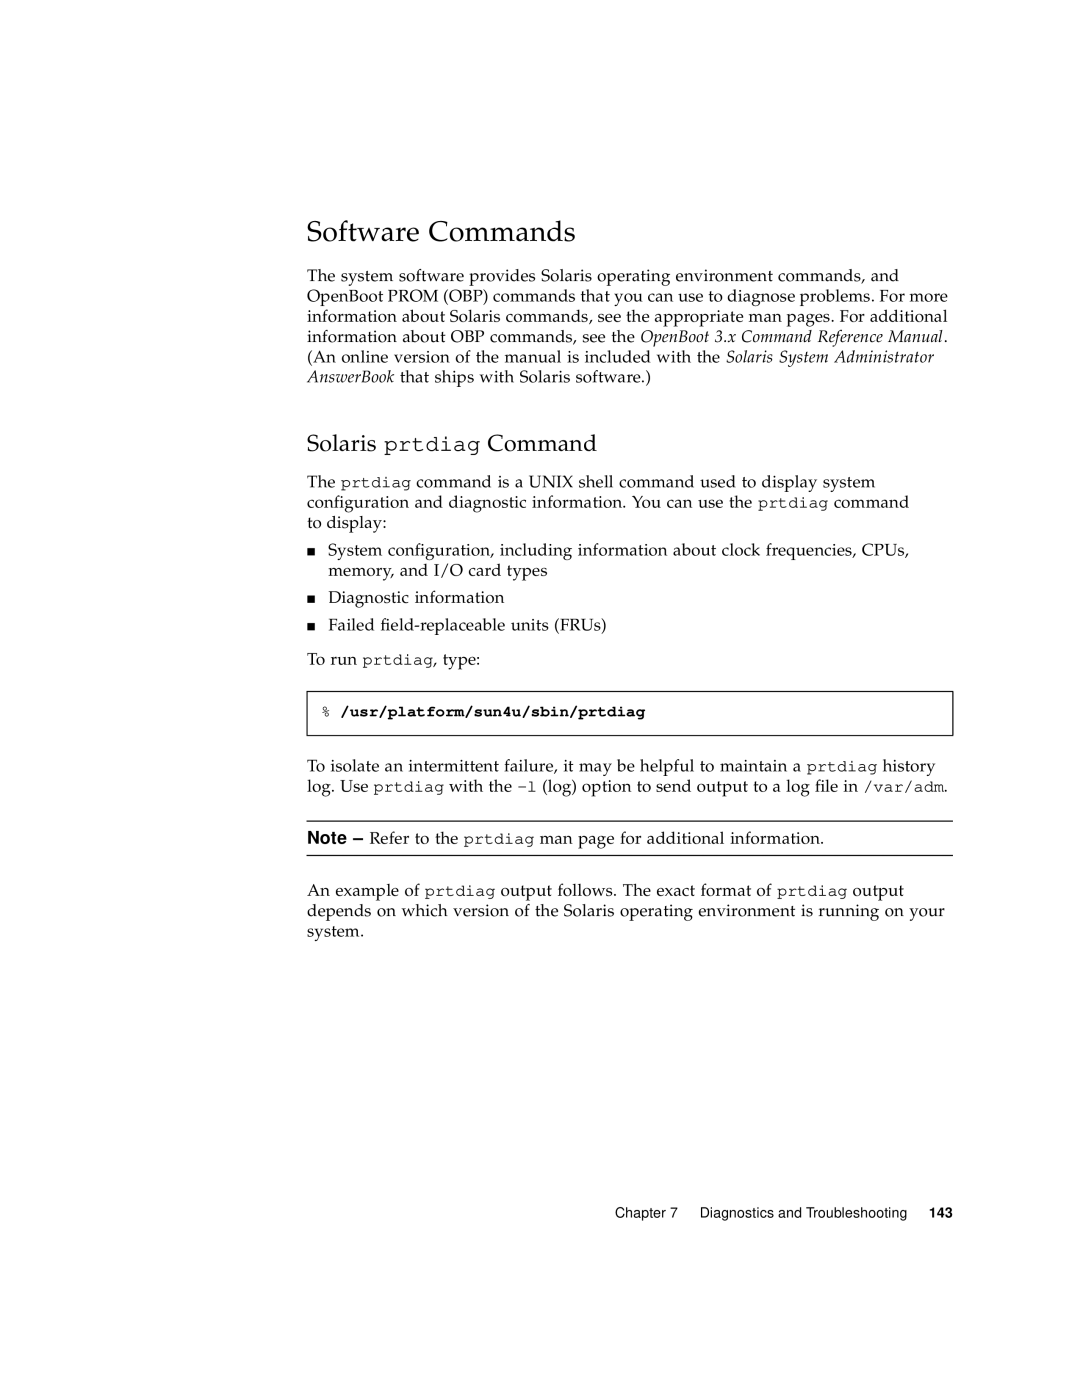 Sun Microsystems 220R manual Software Commands, Solaris prtdiag Command 